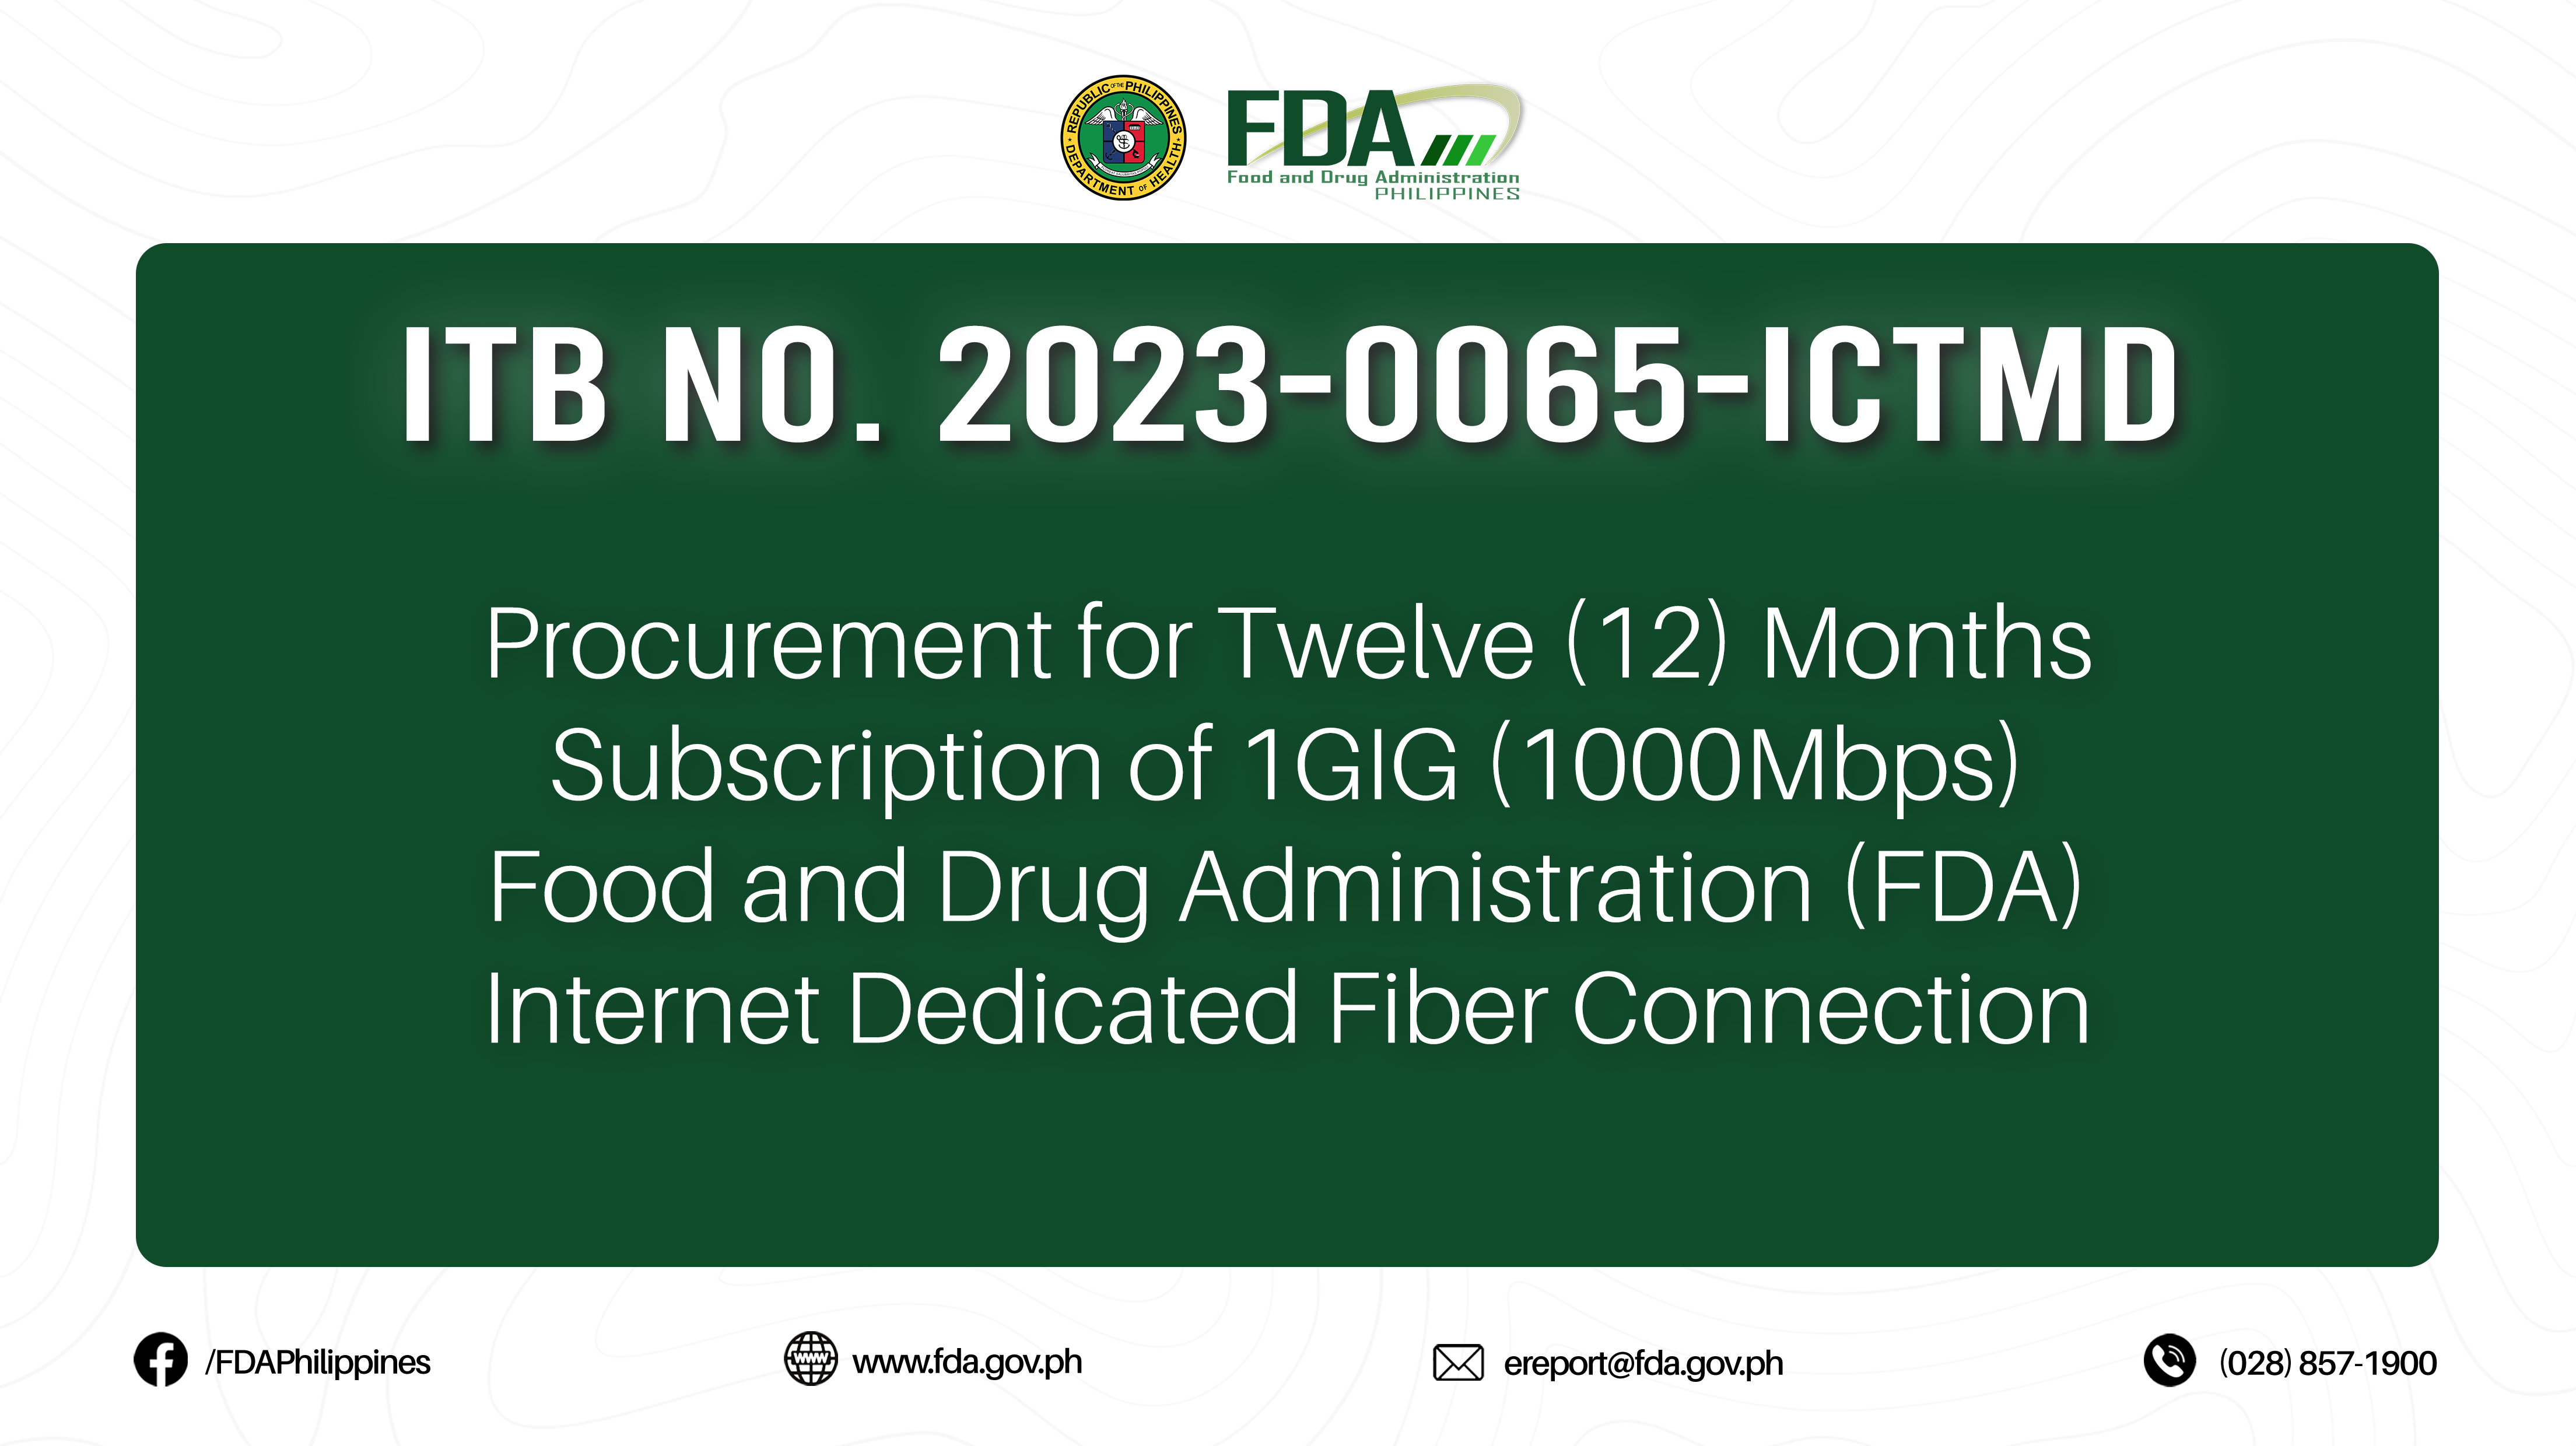 ITB No. 2023-0065-ICTMD || Procurement for Twelve (12) Months Subscription of 1GIG (1000Mbps) Food and Drug Administration (FDA) Internet Dedicated Fiber Connection